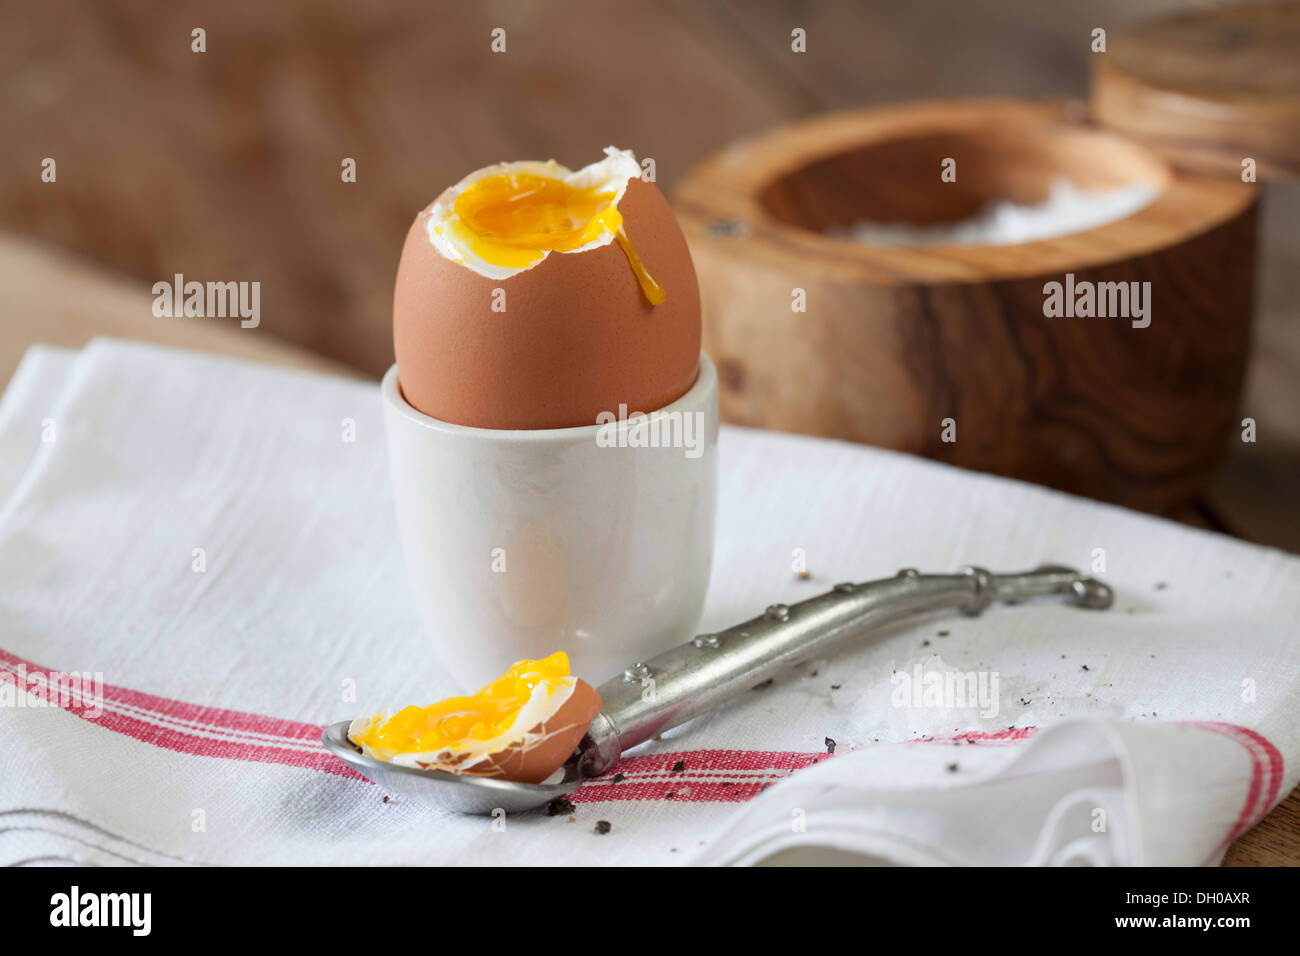 https://c8.alamy.com/comp/DH0AXR/a-soft-boiled-chicken-egg-with-spoon-and-salt-cellar-DH0AXR.jpg